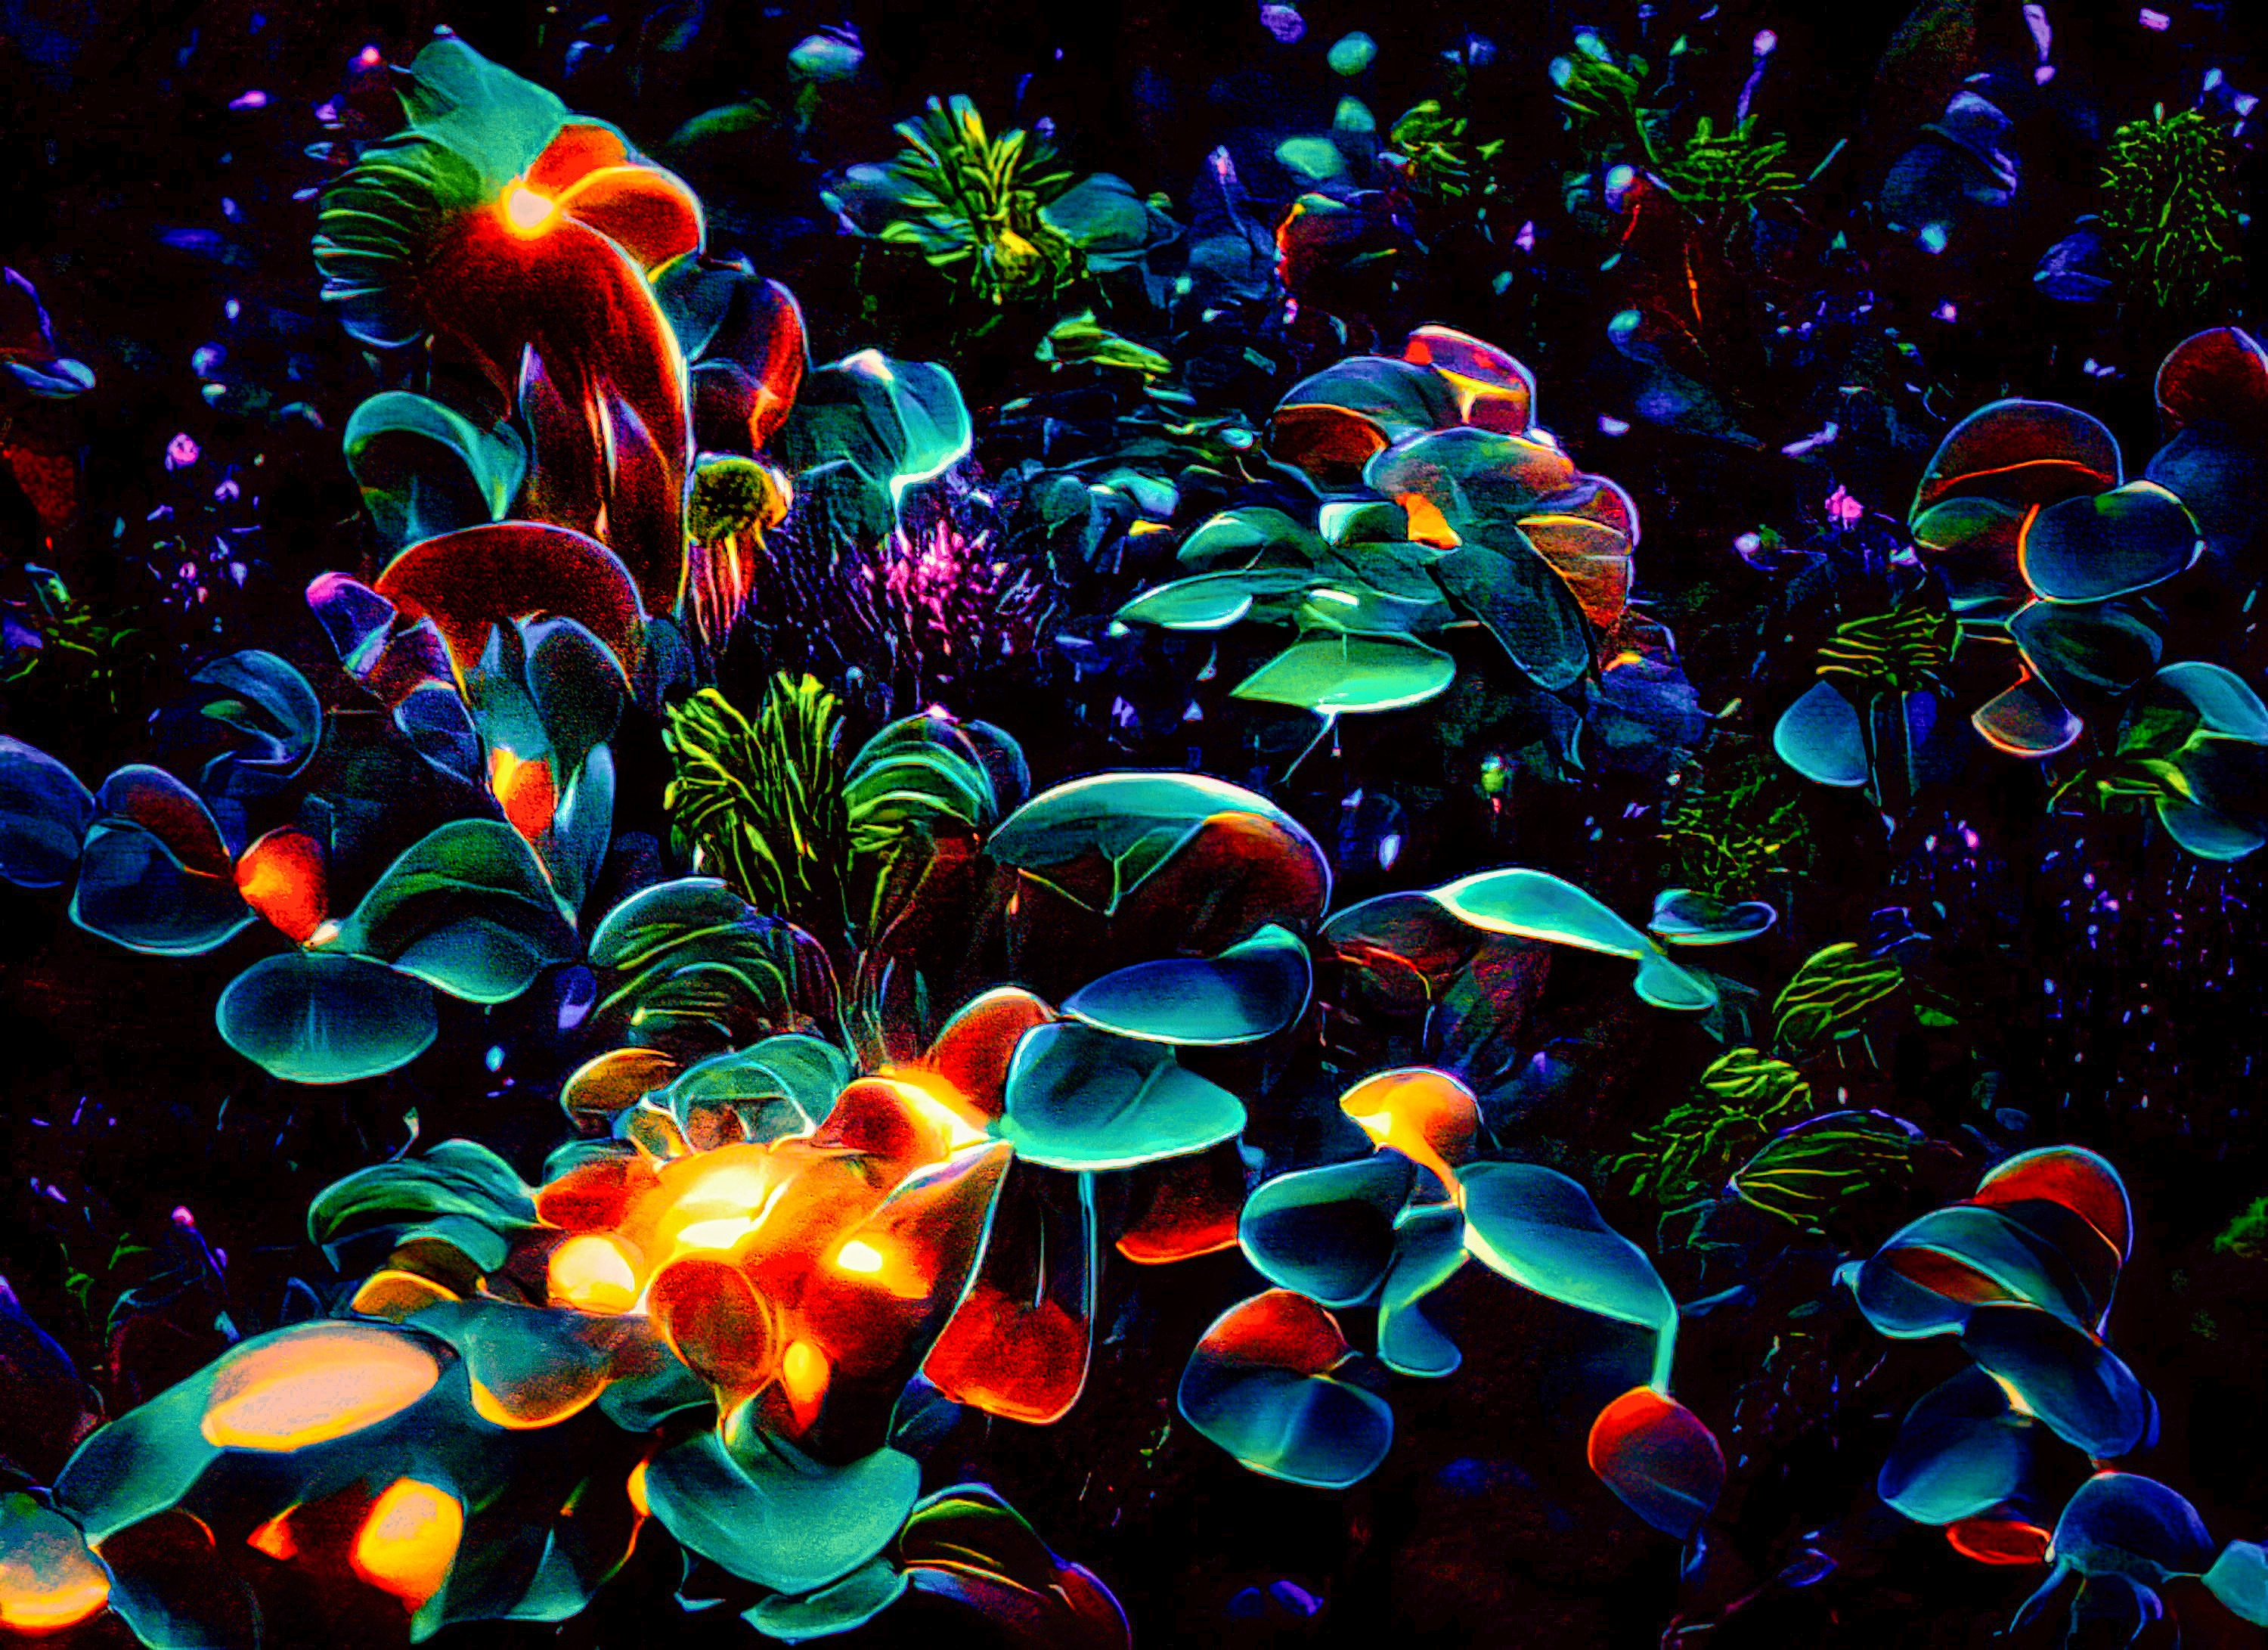 The Corals Genesis #160